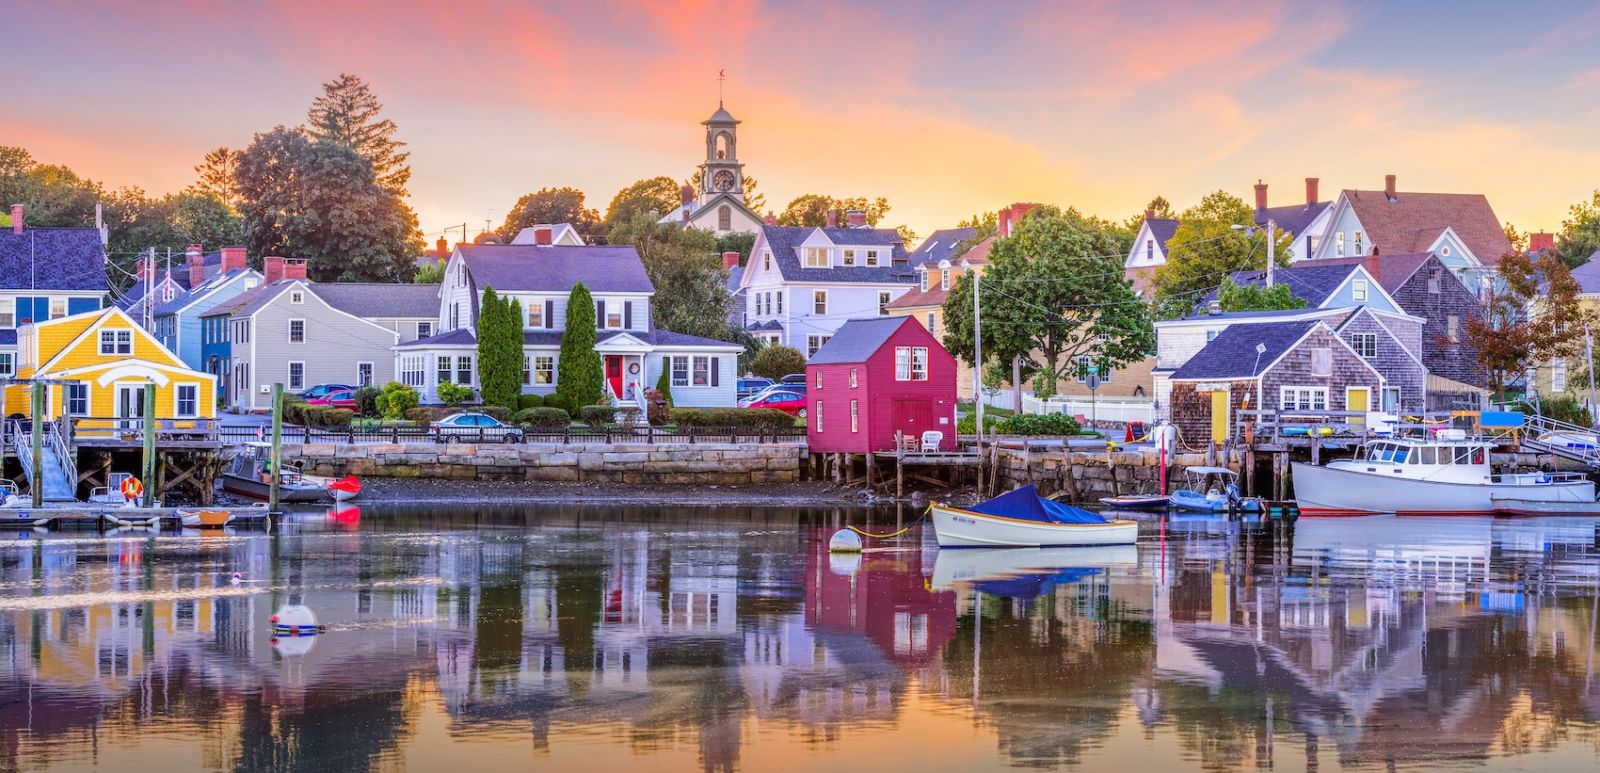 Portsmouth, New Hampshire, townscape. Photo via Shutterstock.